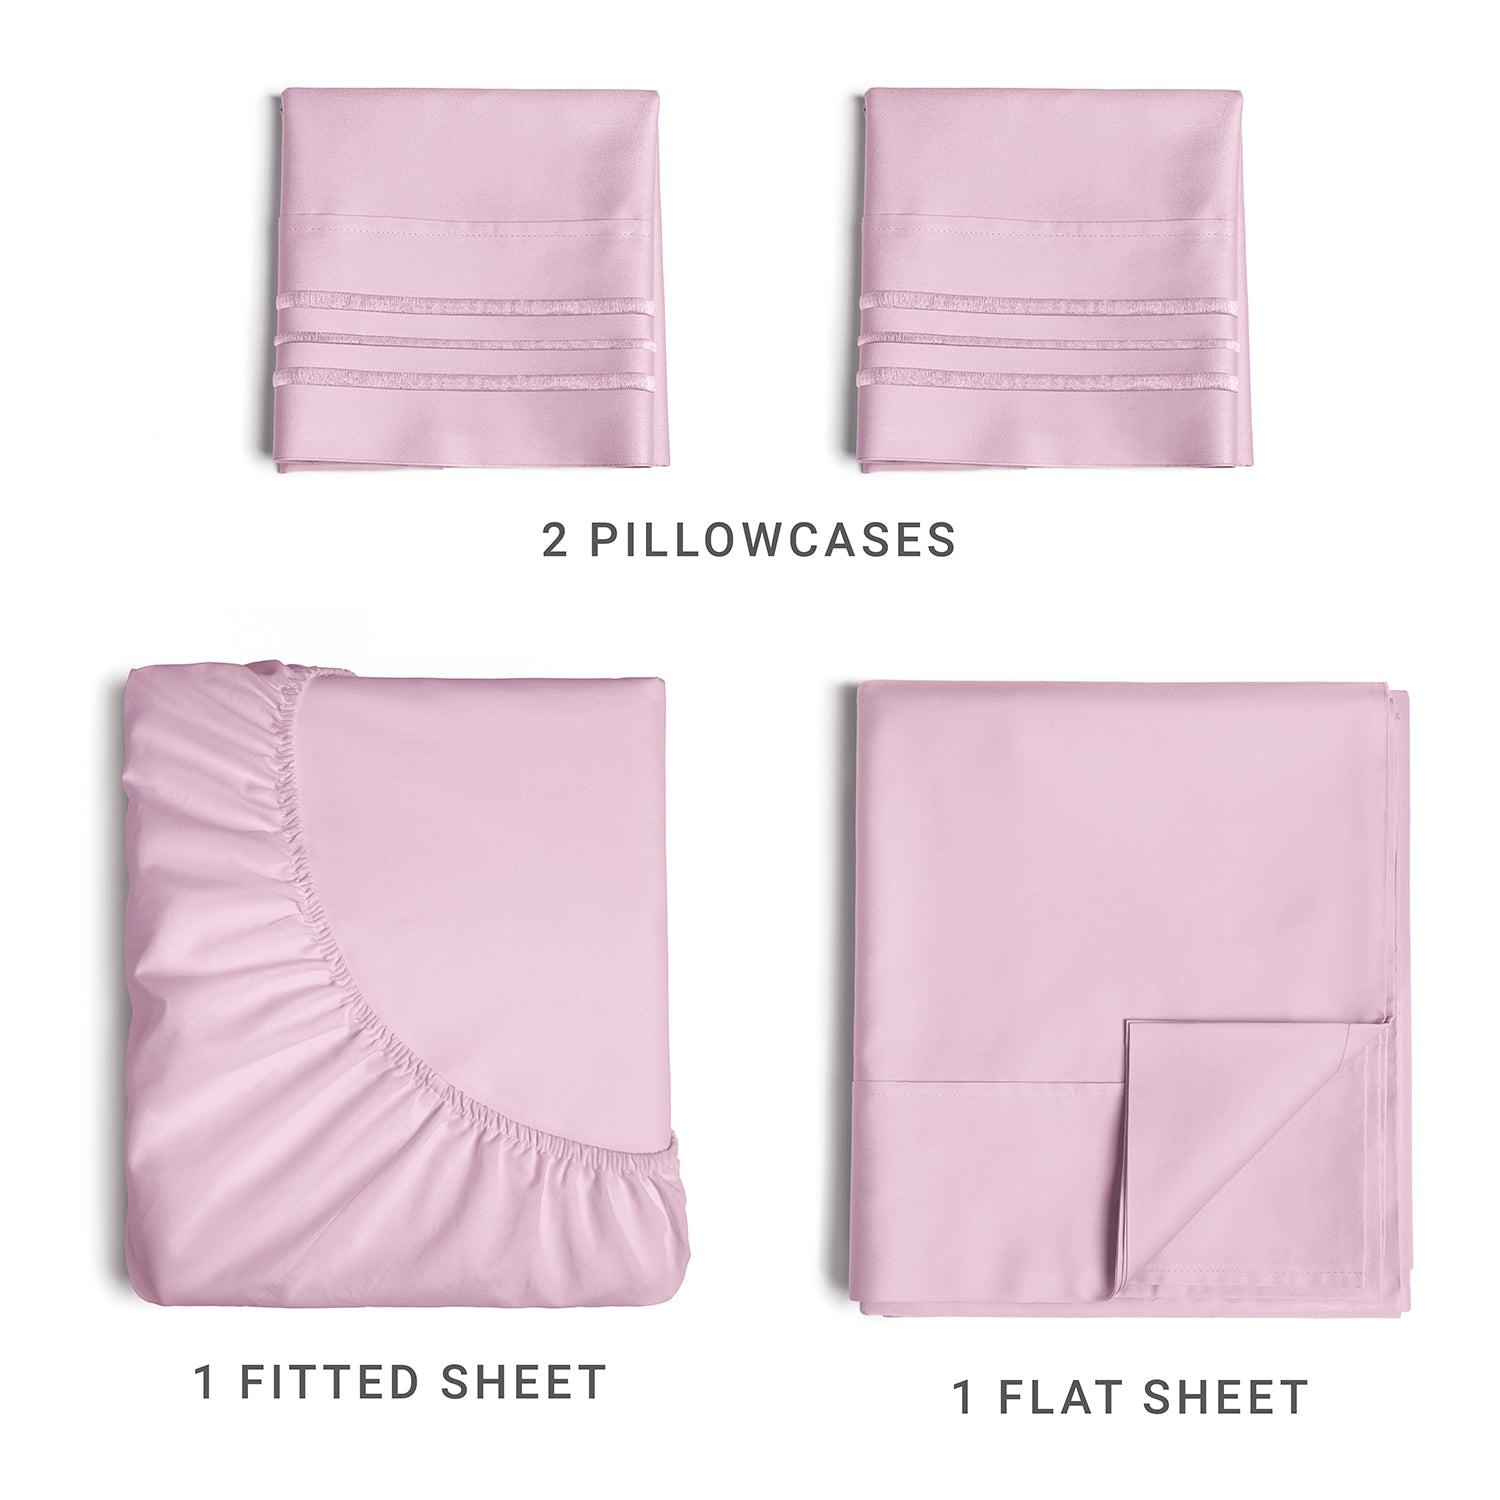 4pc Sheet Set New Colors/Patterns - Light Pink